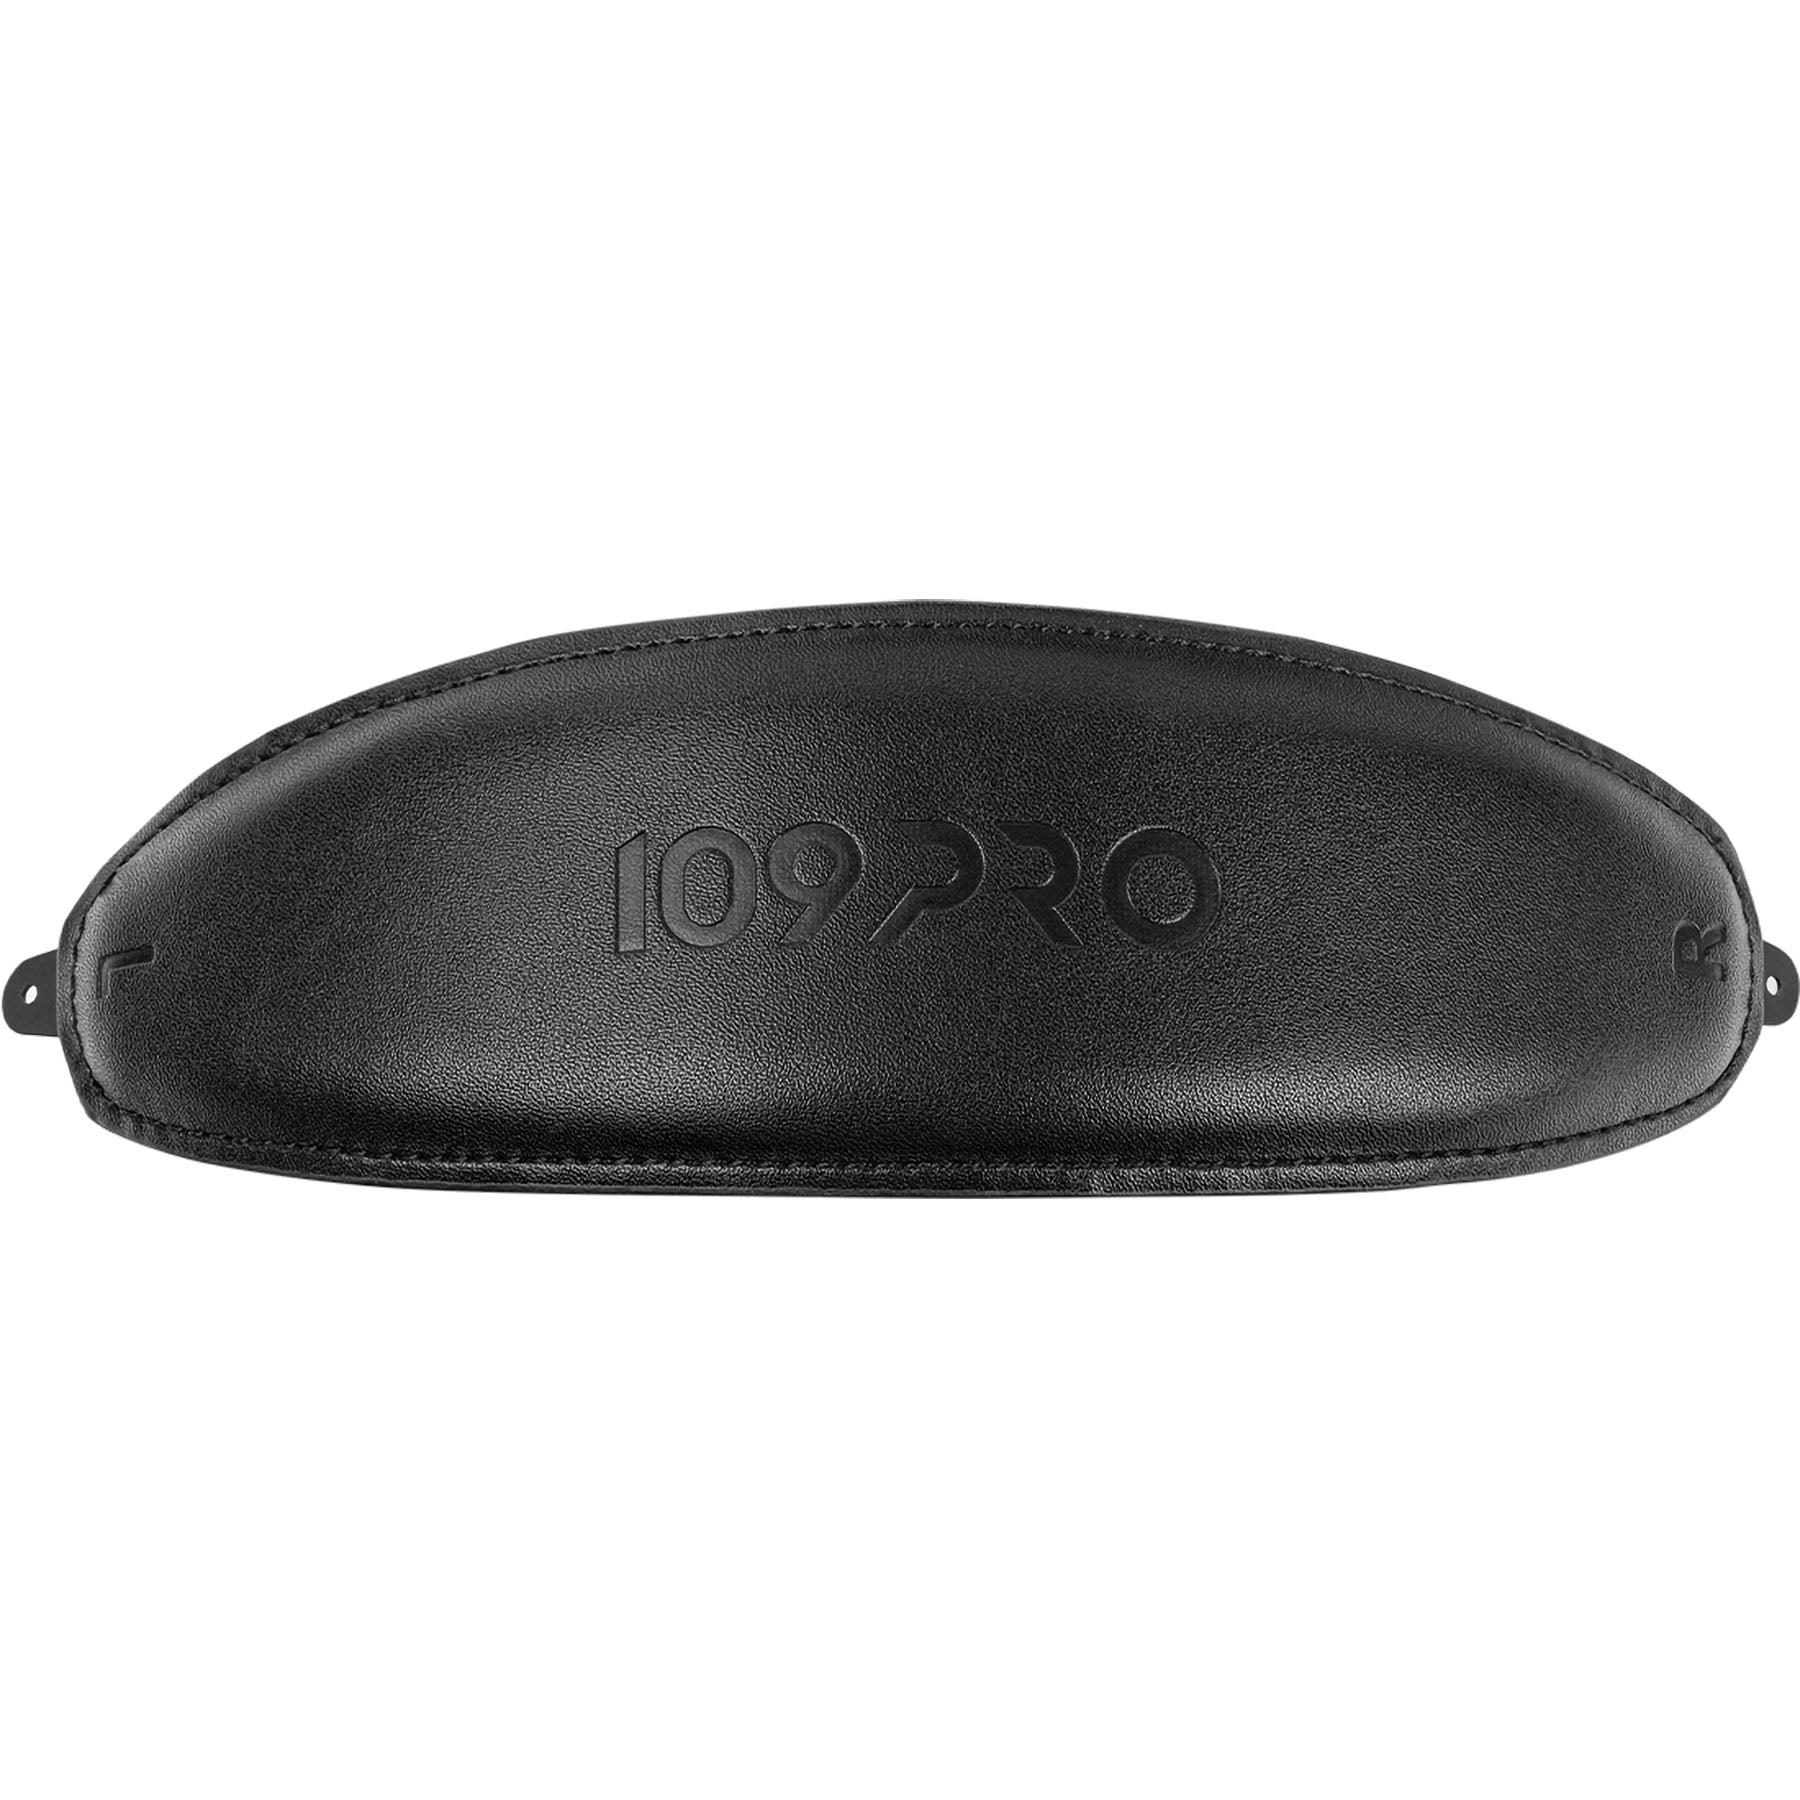 Meze Audio 109 Pro PU Leather Headband